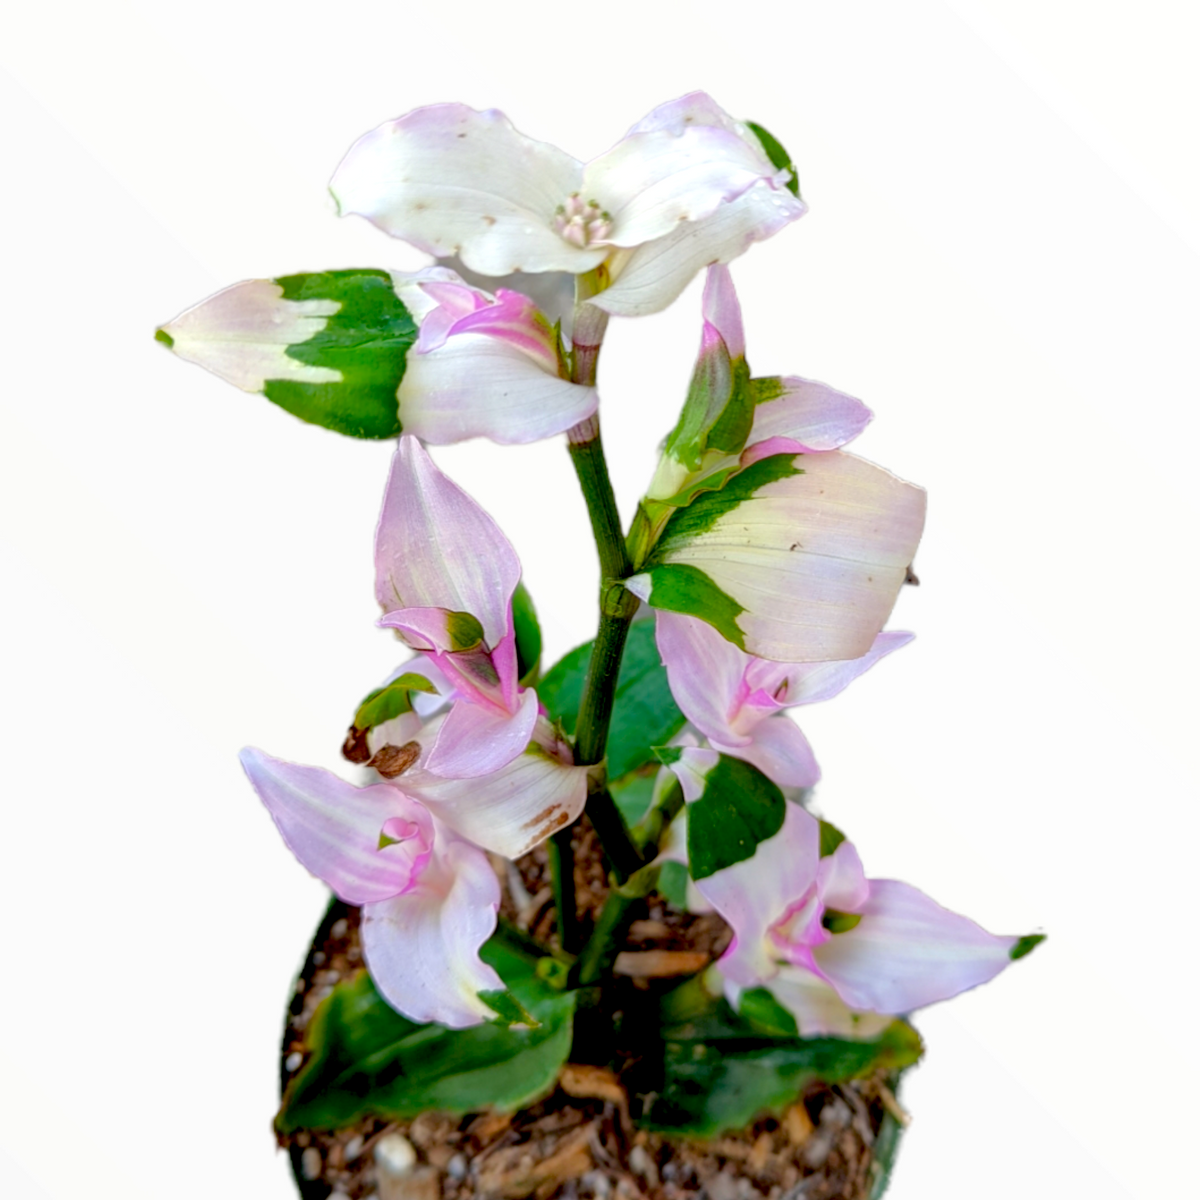 Tradescantia 'Blushing Bride' – One Earth Botanical